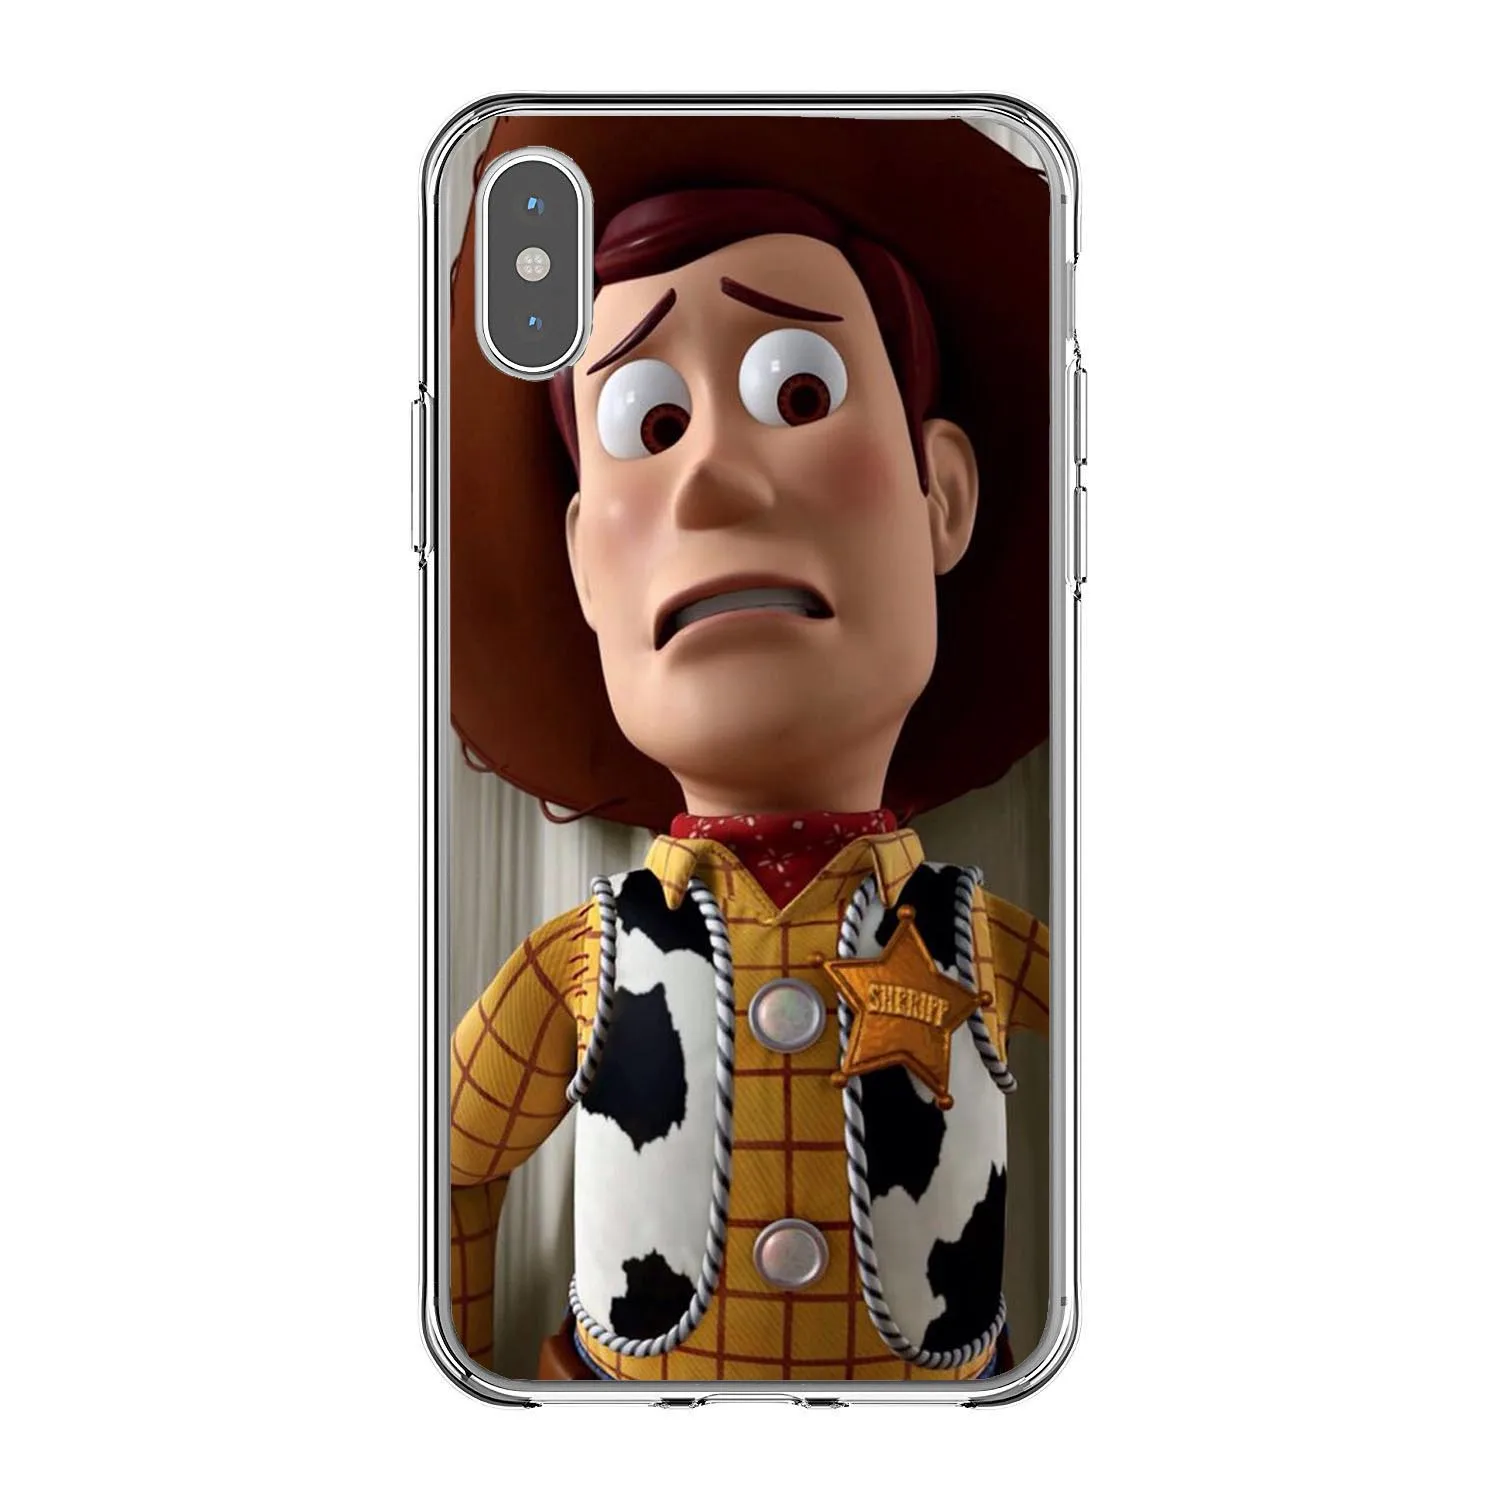 Cowboy Woody Buzz Lightyear Toy Story Мягкие силиконовые чехлы для телефонов из ТПУ для iPhone X 5 5S SE 6 6S Plus 7 8 Plus XS XR XS MAX